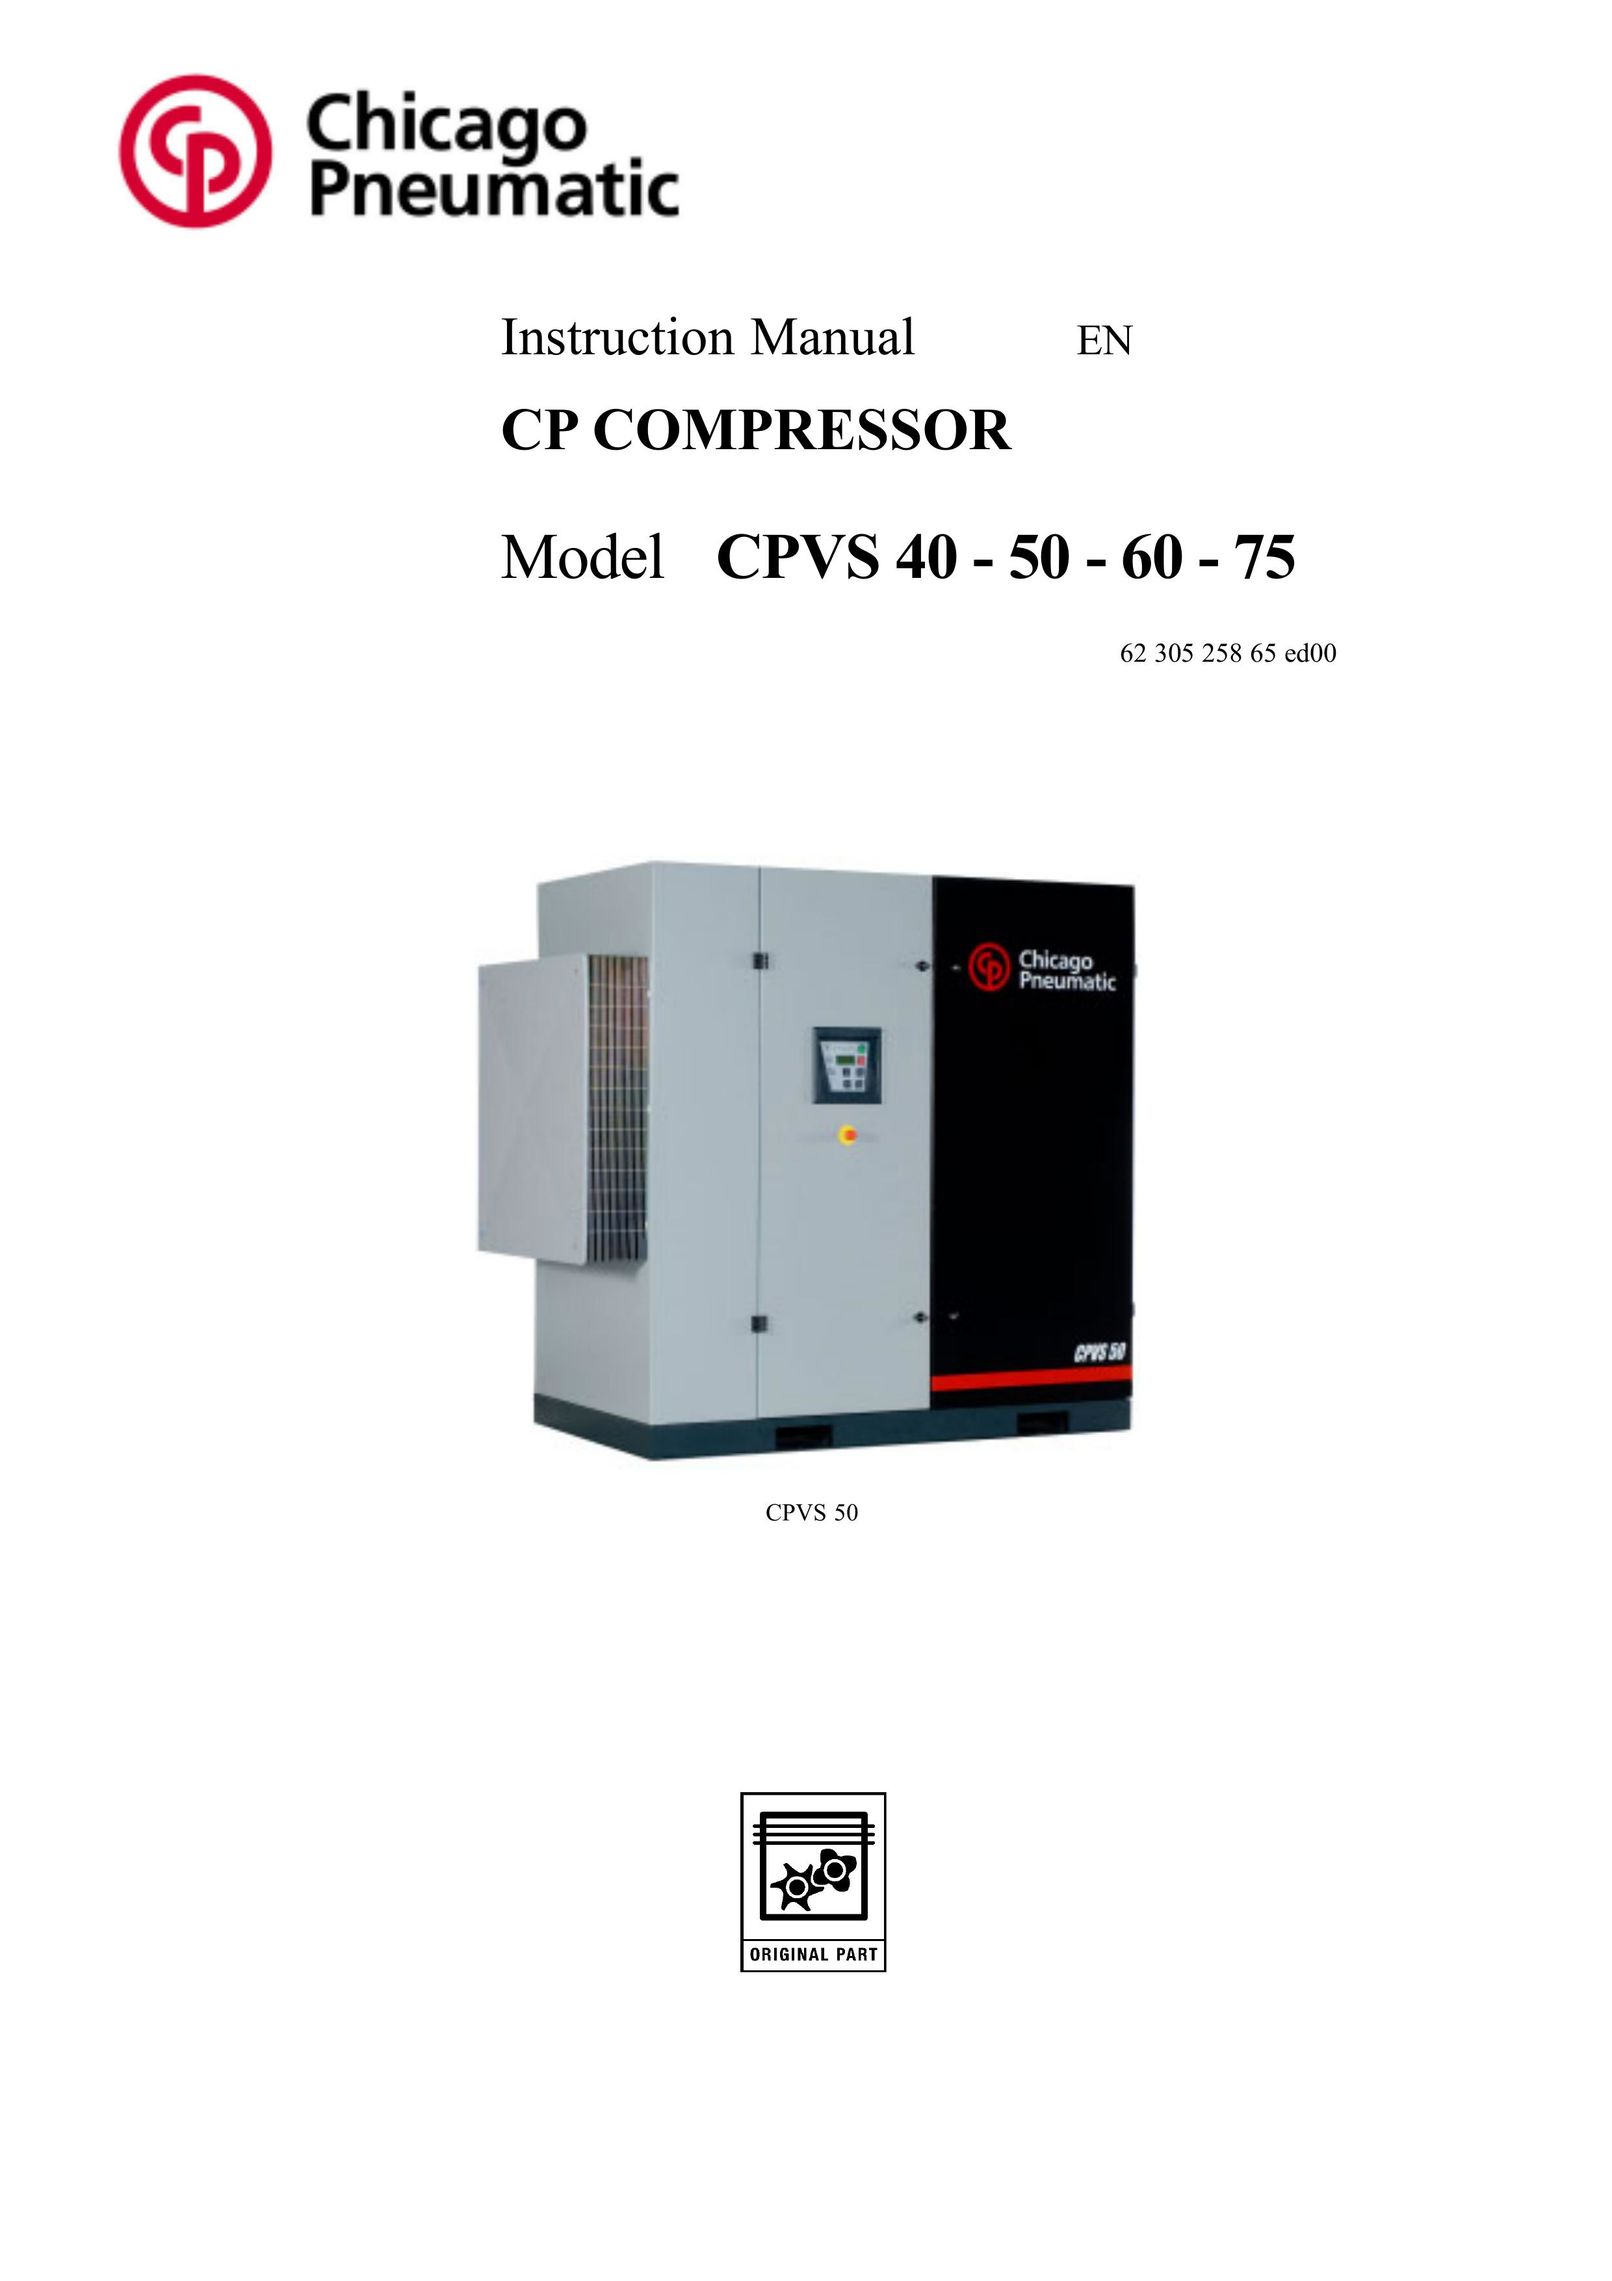 Chicago Pneumatic CPVS 60 Air Compressor User Manual